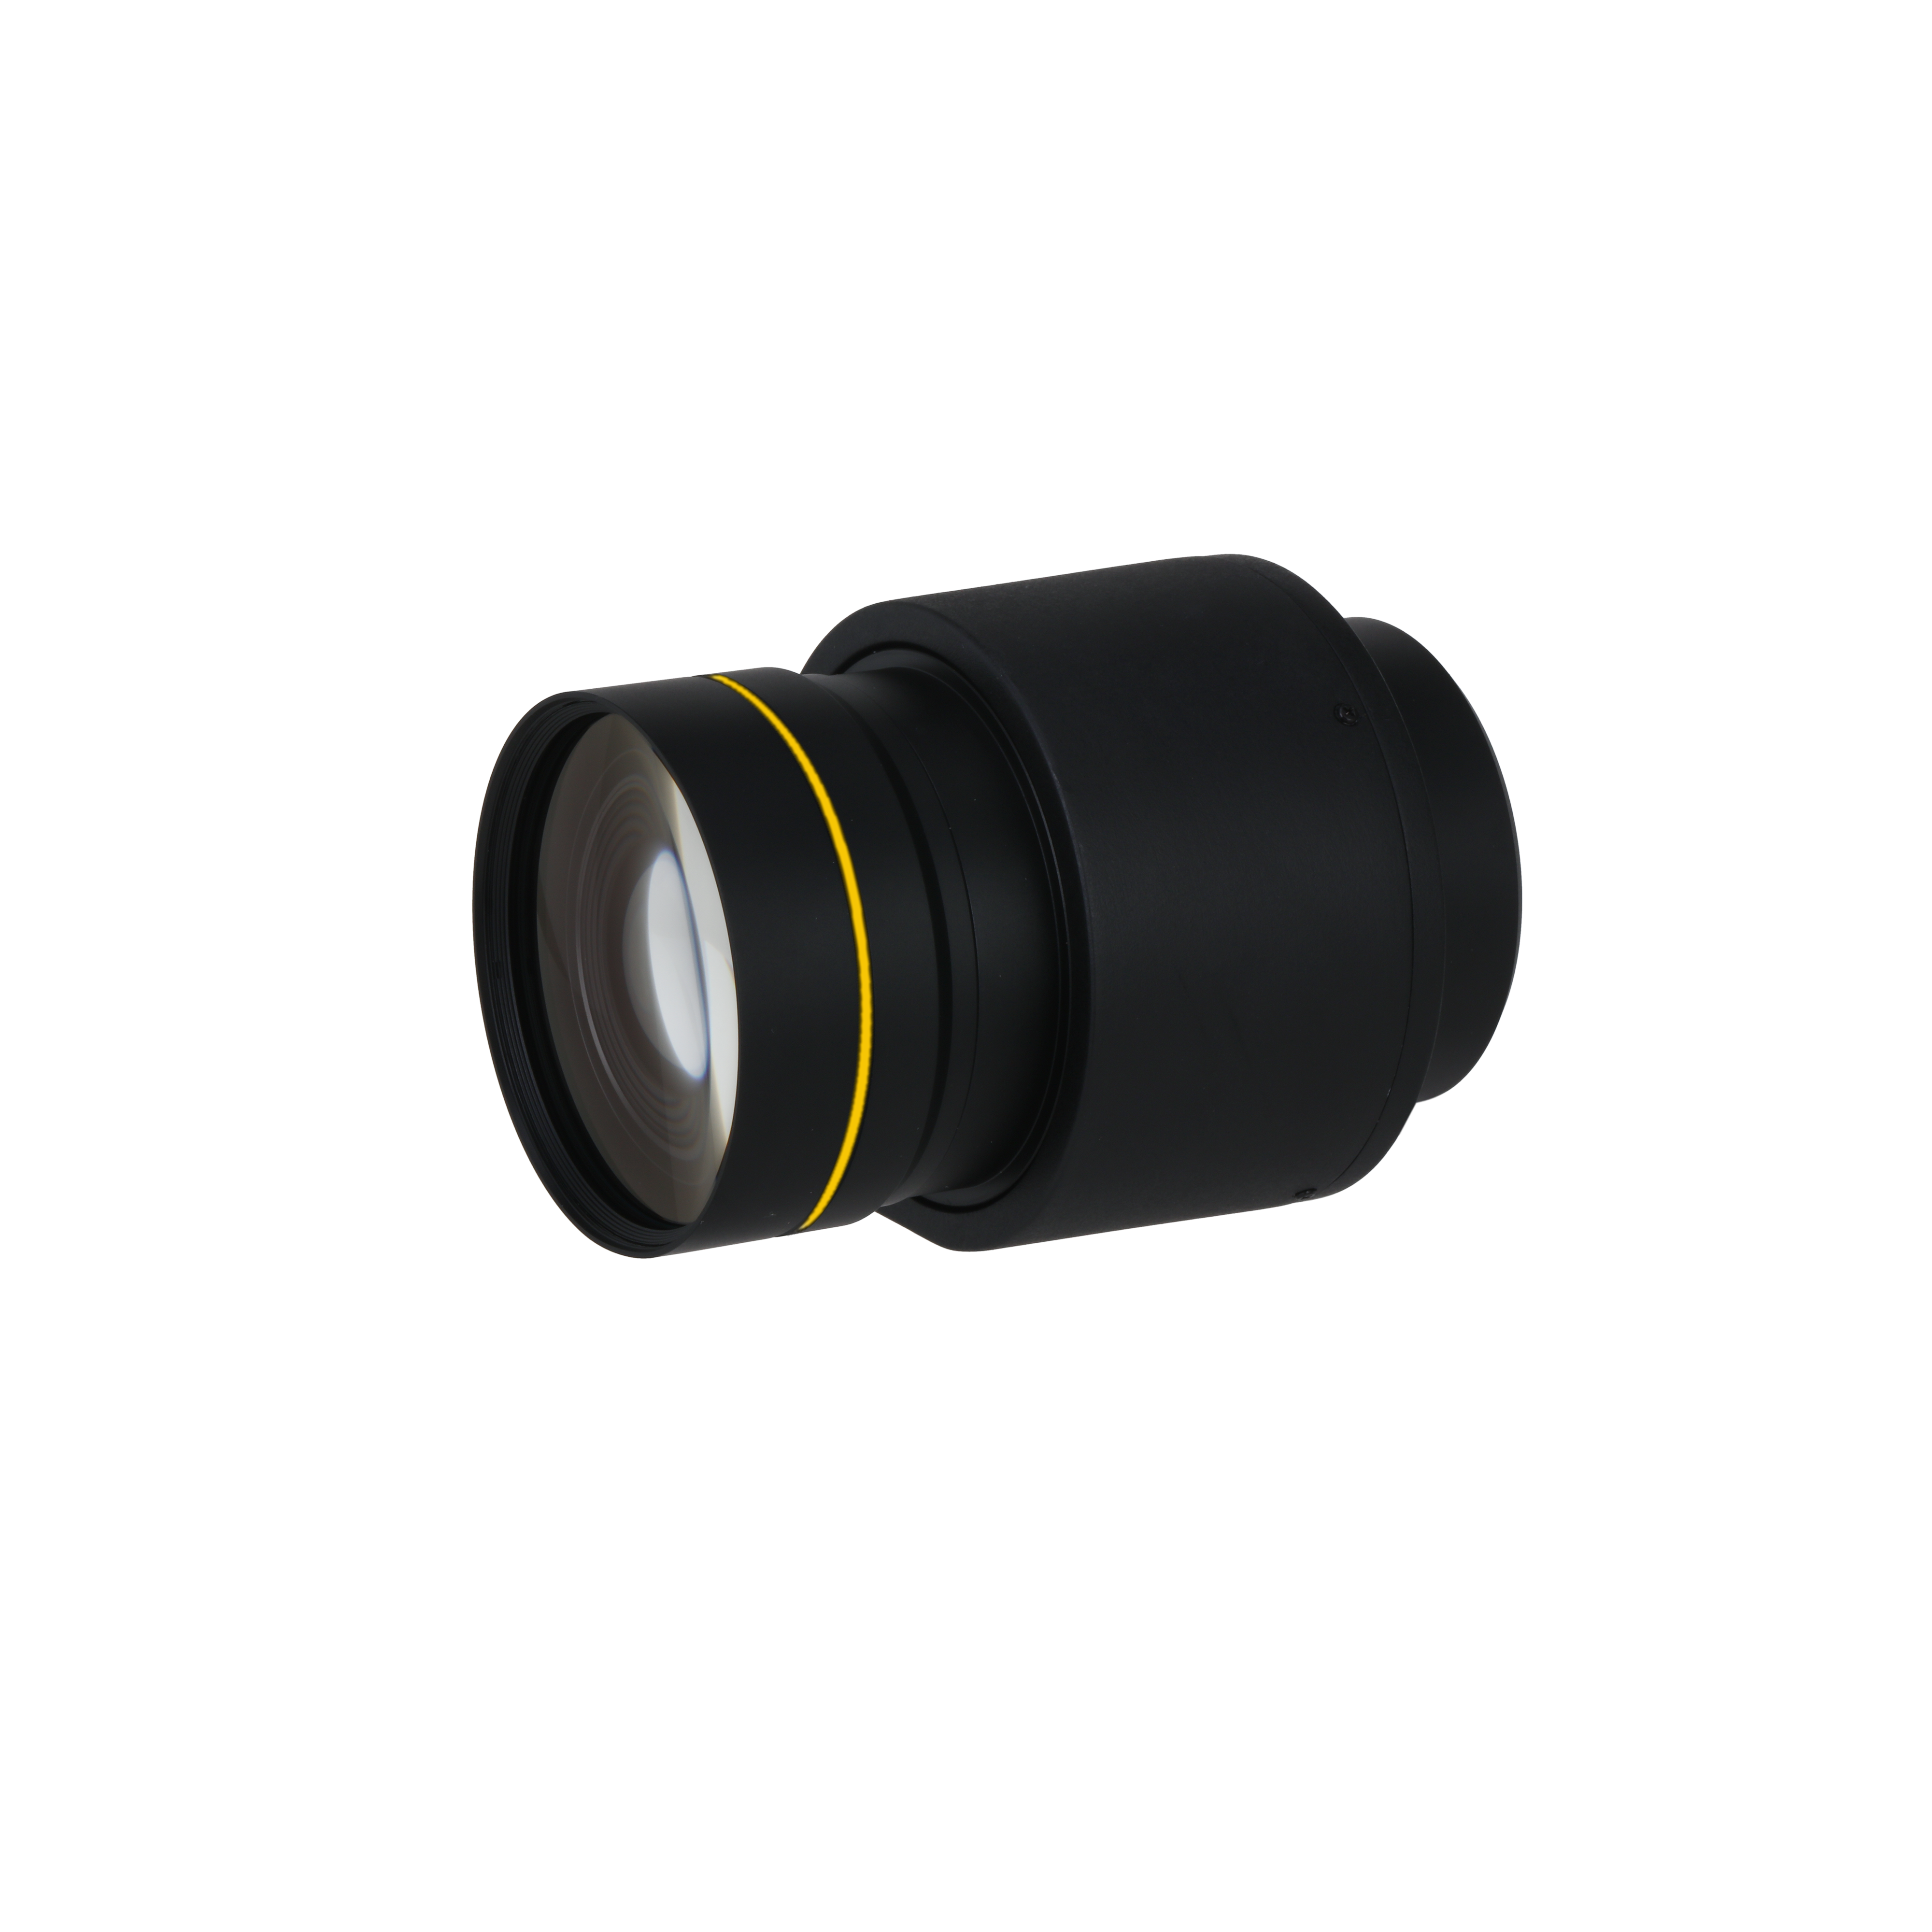 DAHUA PFL1640-L12PE 12MP 1.1" F1.4 16-40 mm Motorized Lens (P-iris)